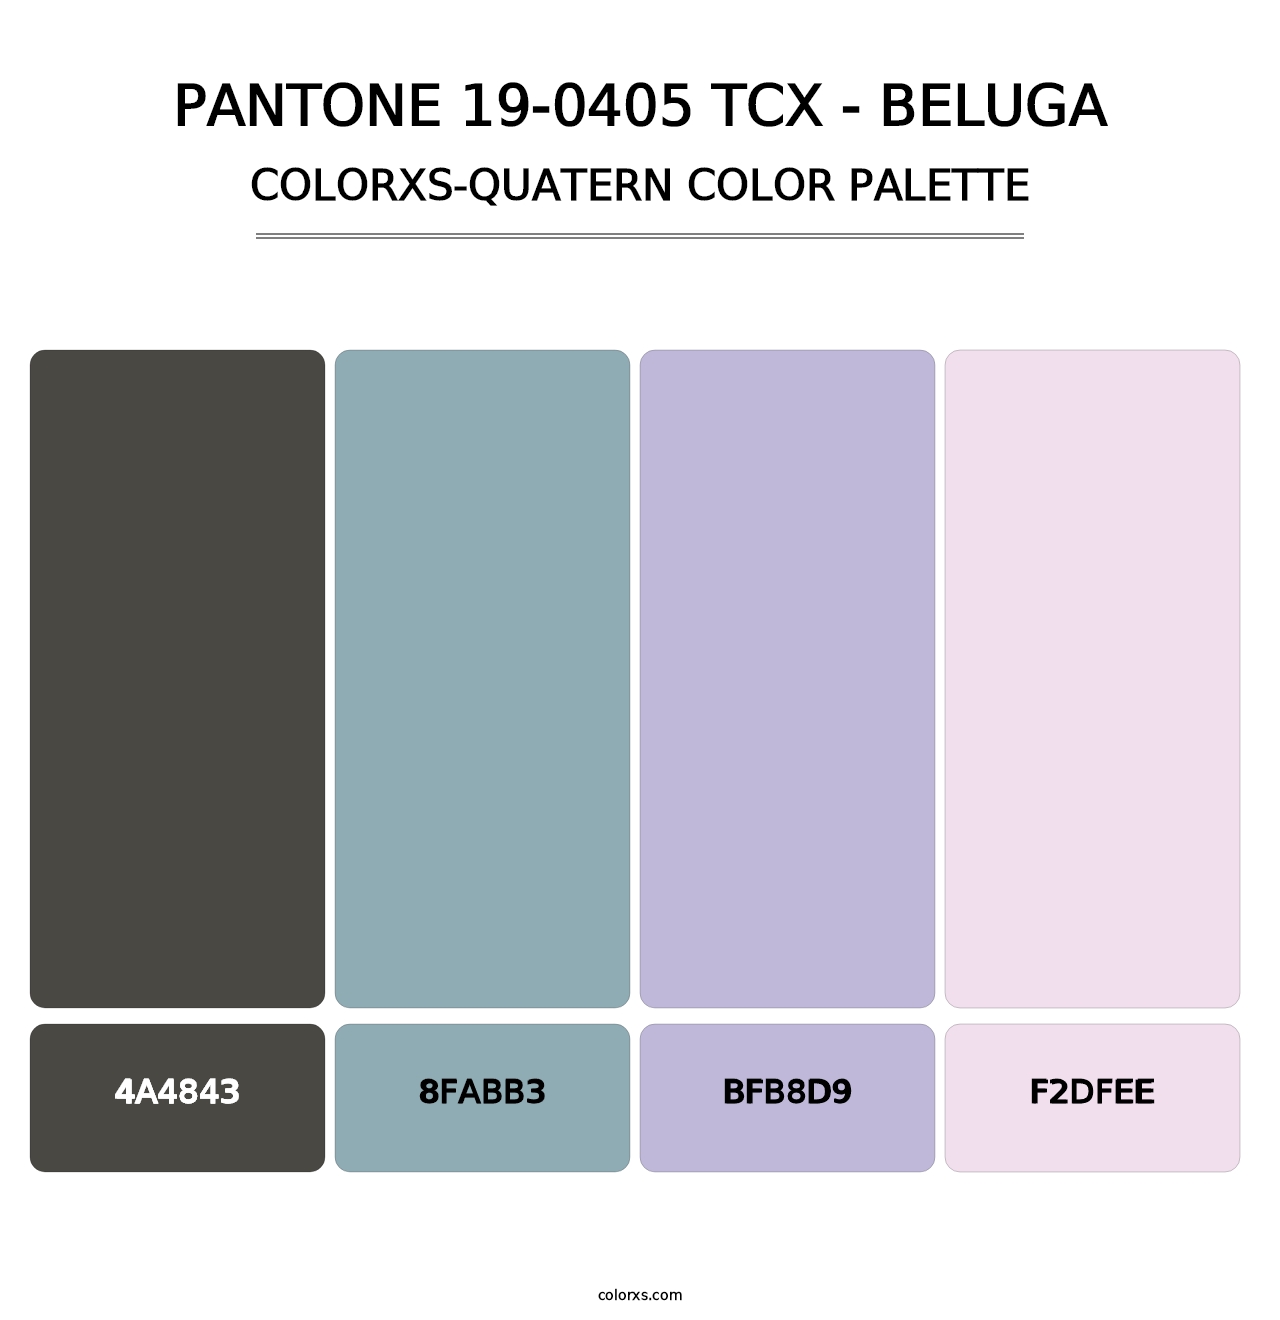 PANTONE 19-0405 TCX - Beluga - Colorxs Quatern Palette